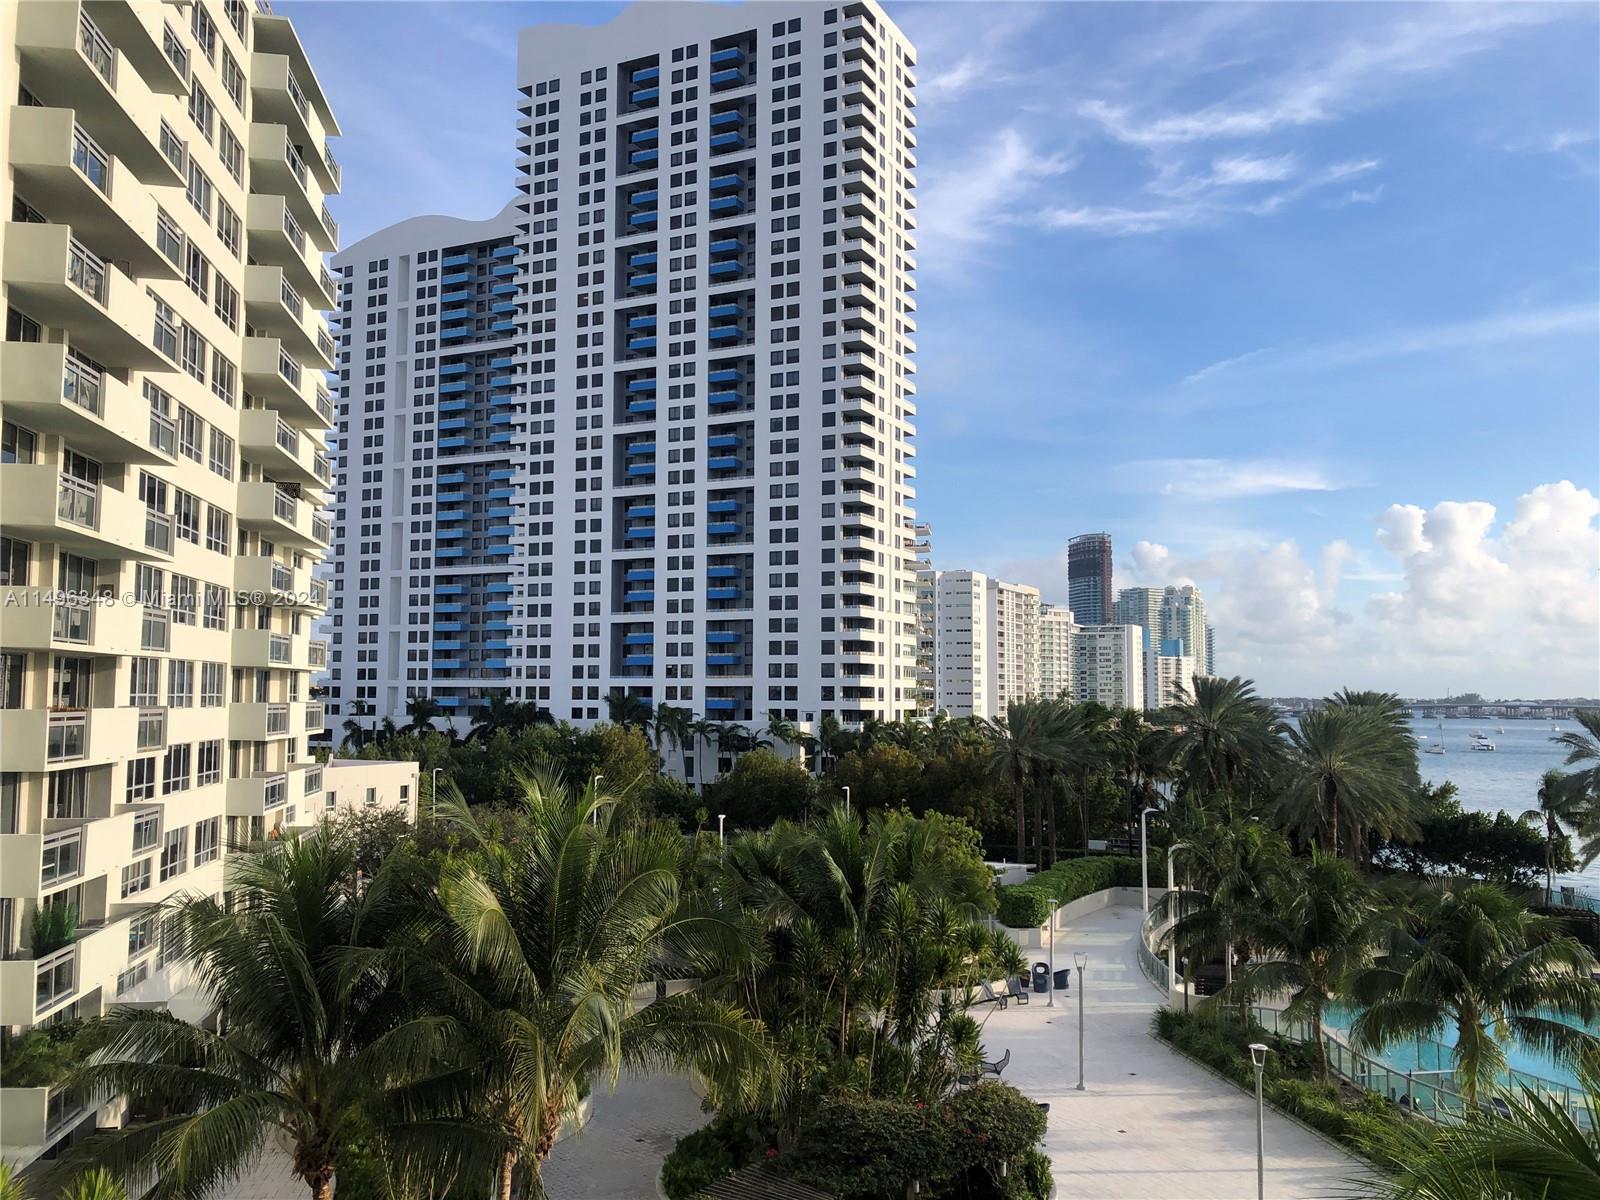 Photo of 1500 Bay Rd #528S in Miami Beach, FL